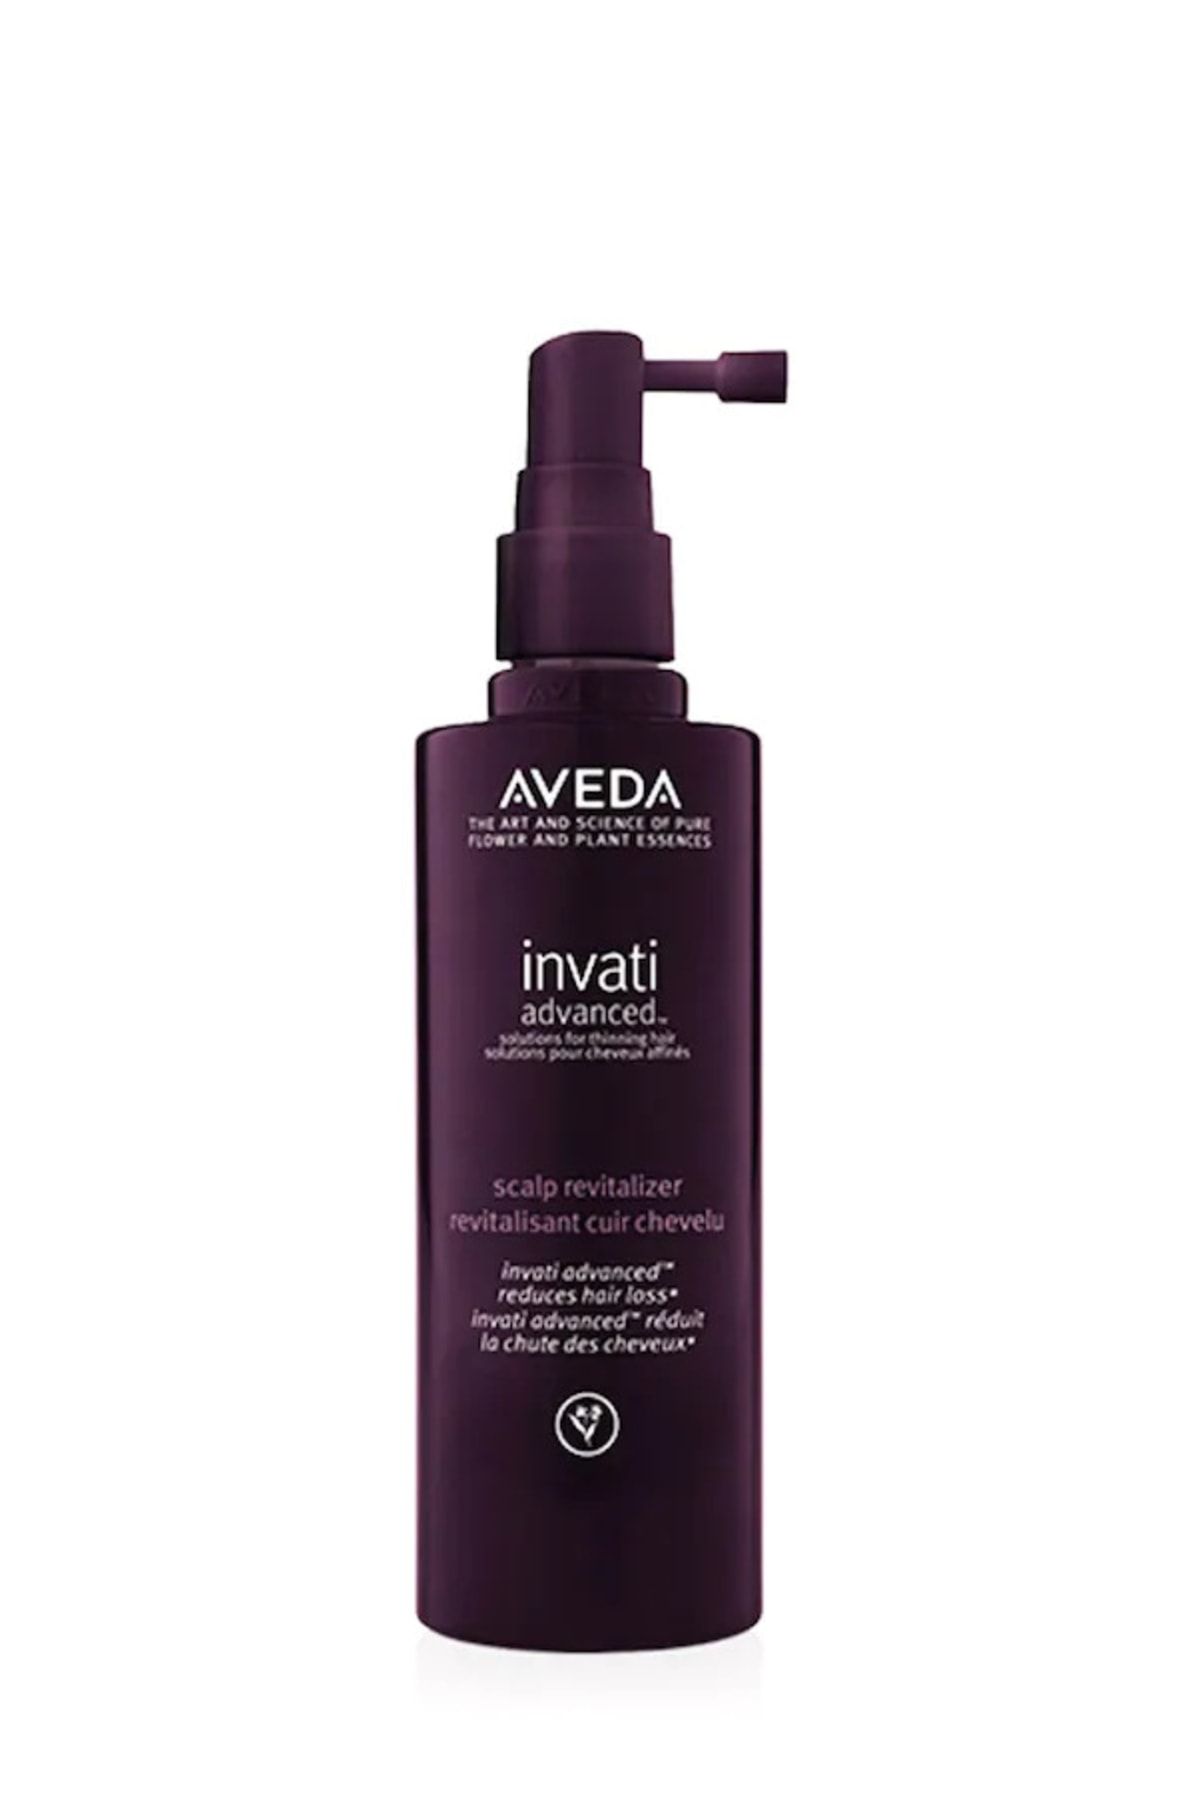 Aveda Invati Advanced Dökülme Karşıtı Saç Serumu 150 Ml Onress Cosmetıc